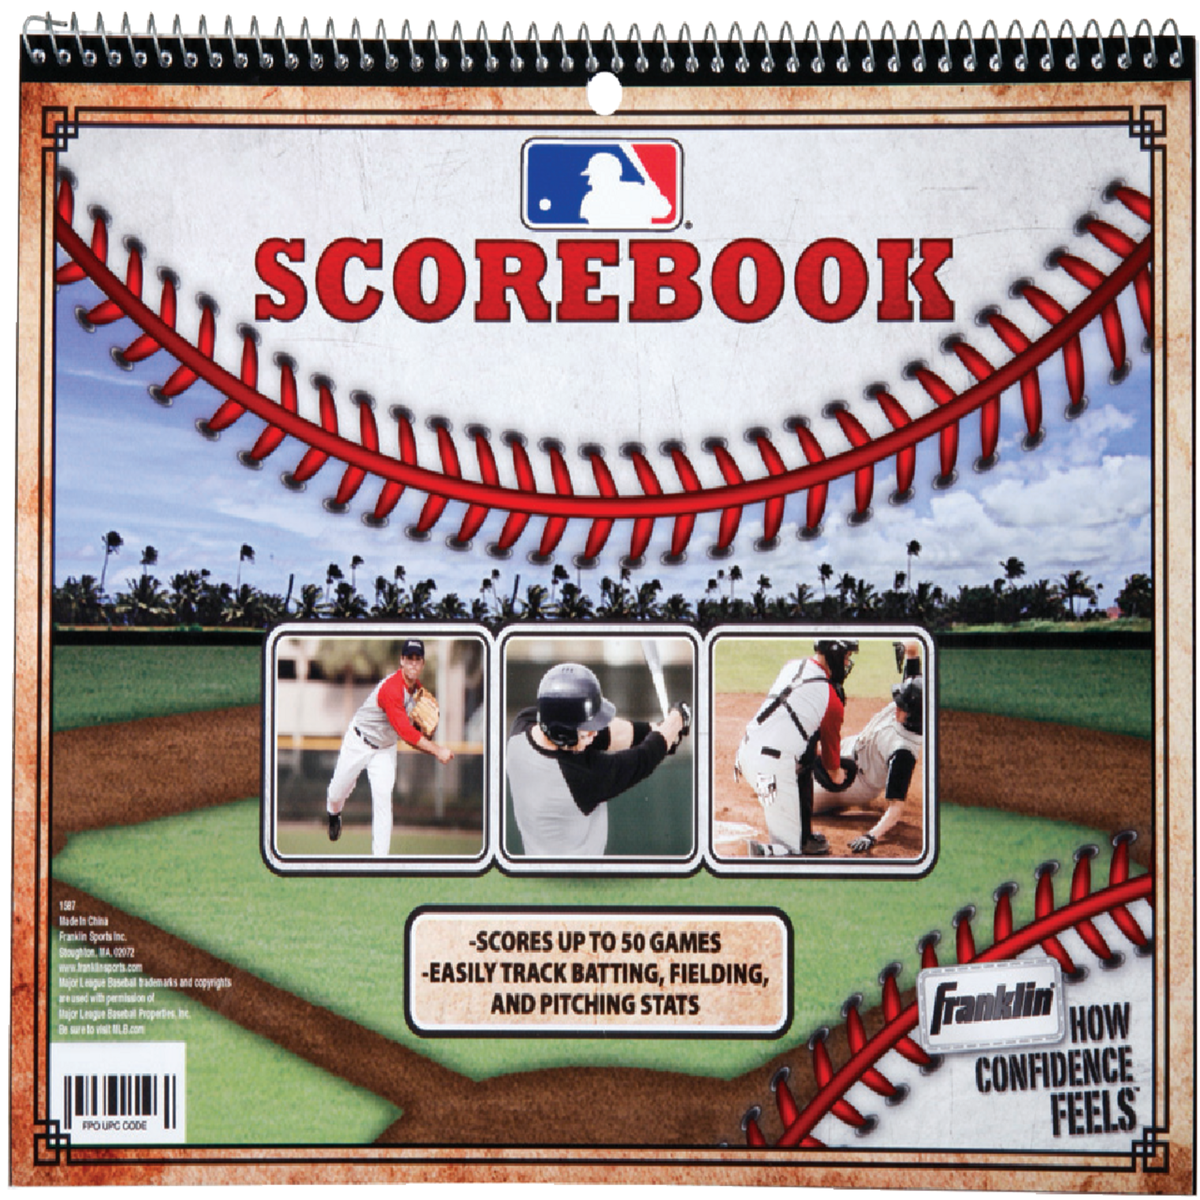 Baseball Score Book